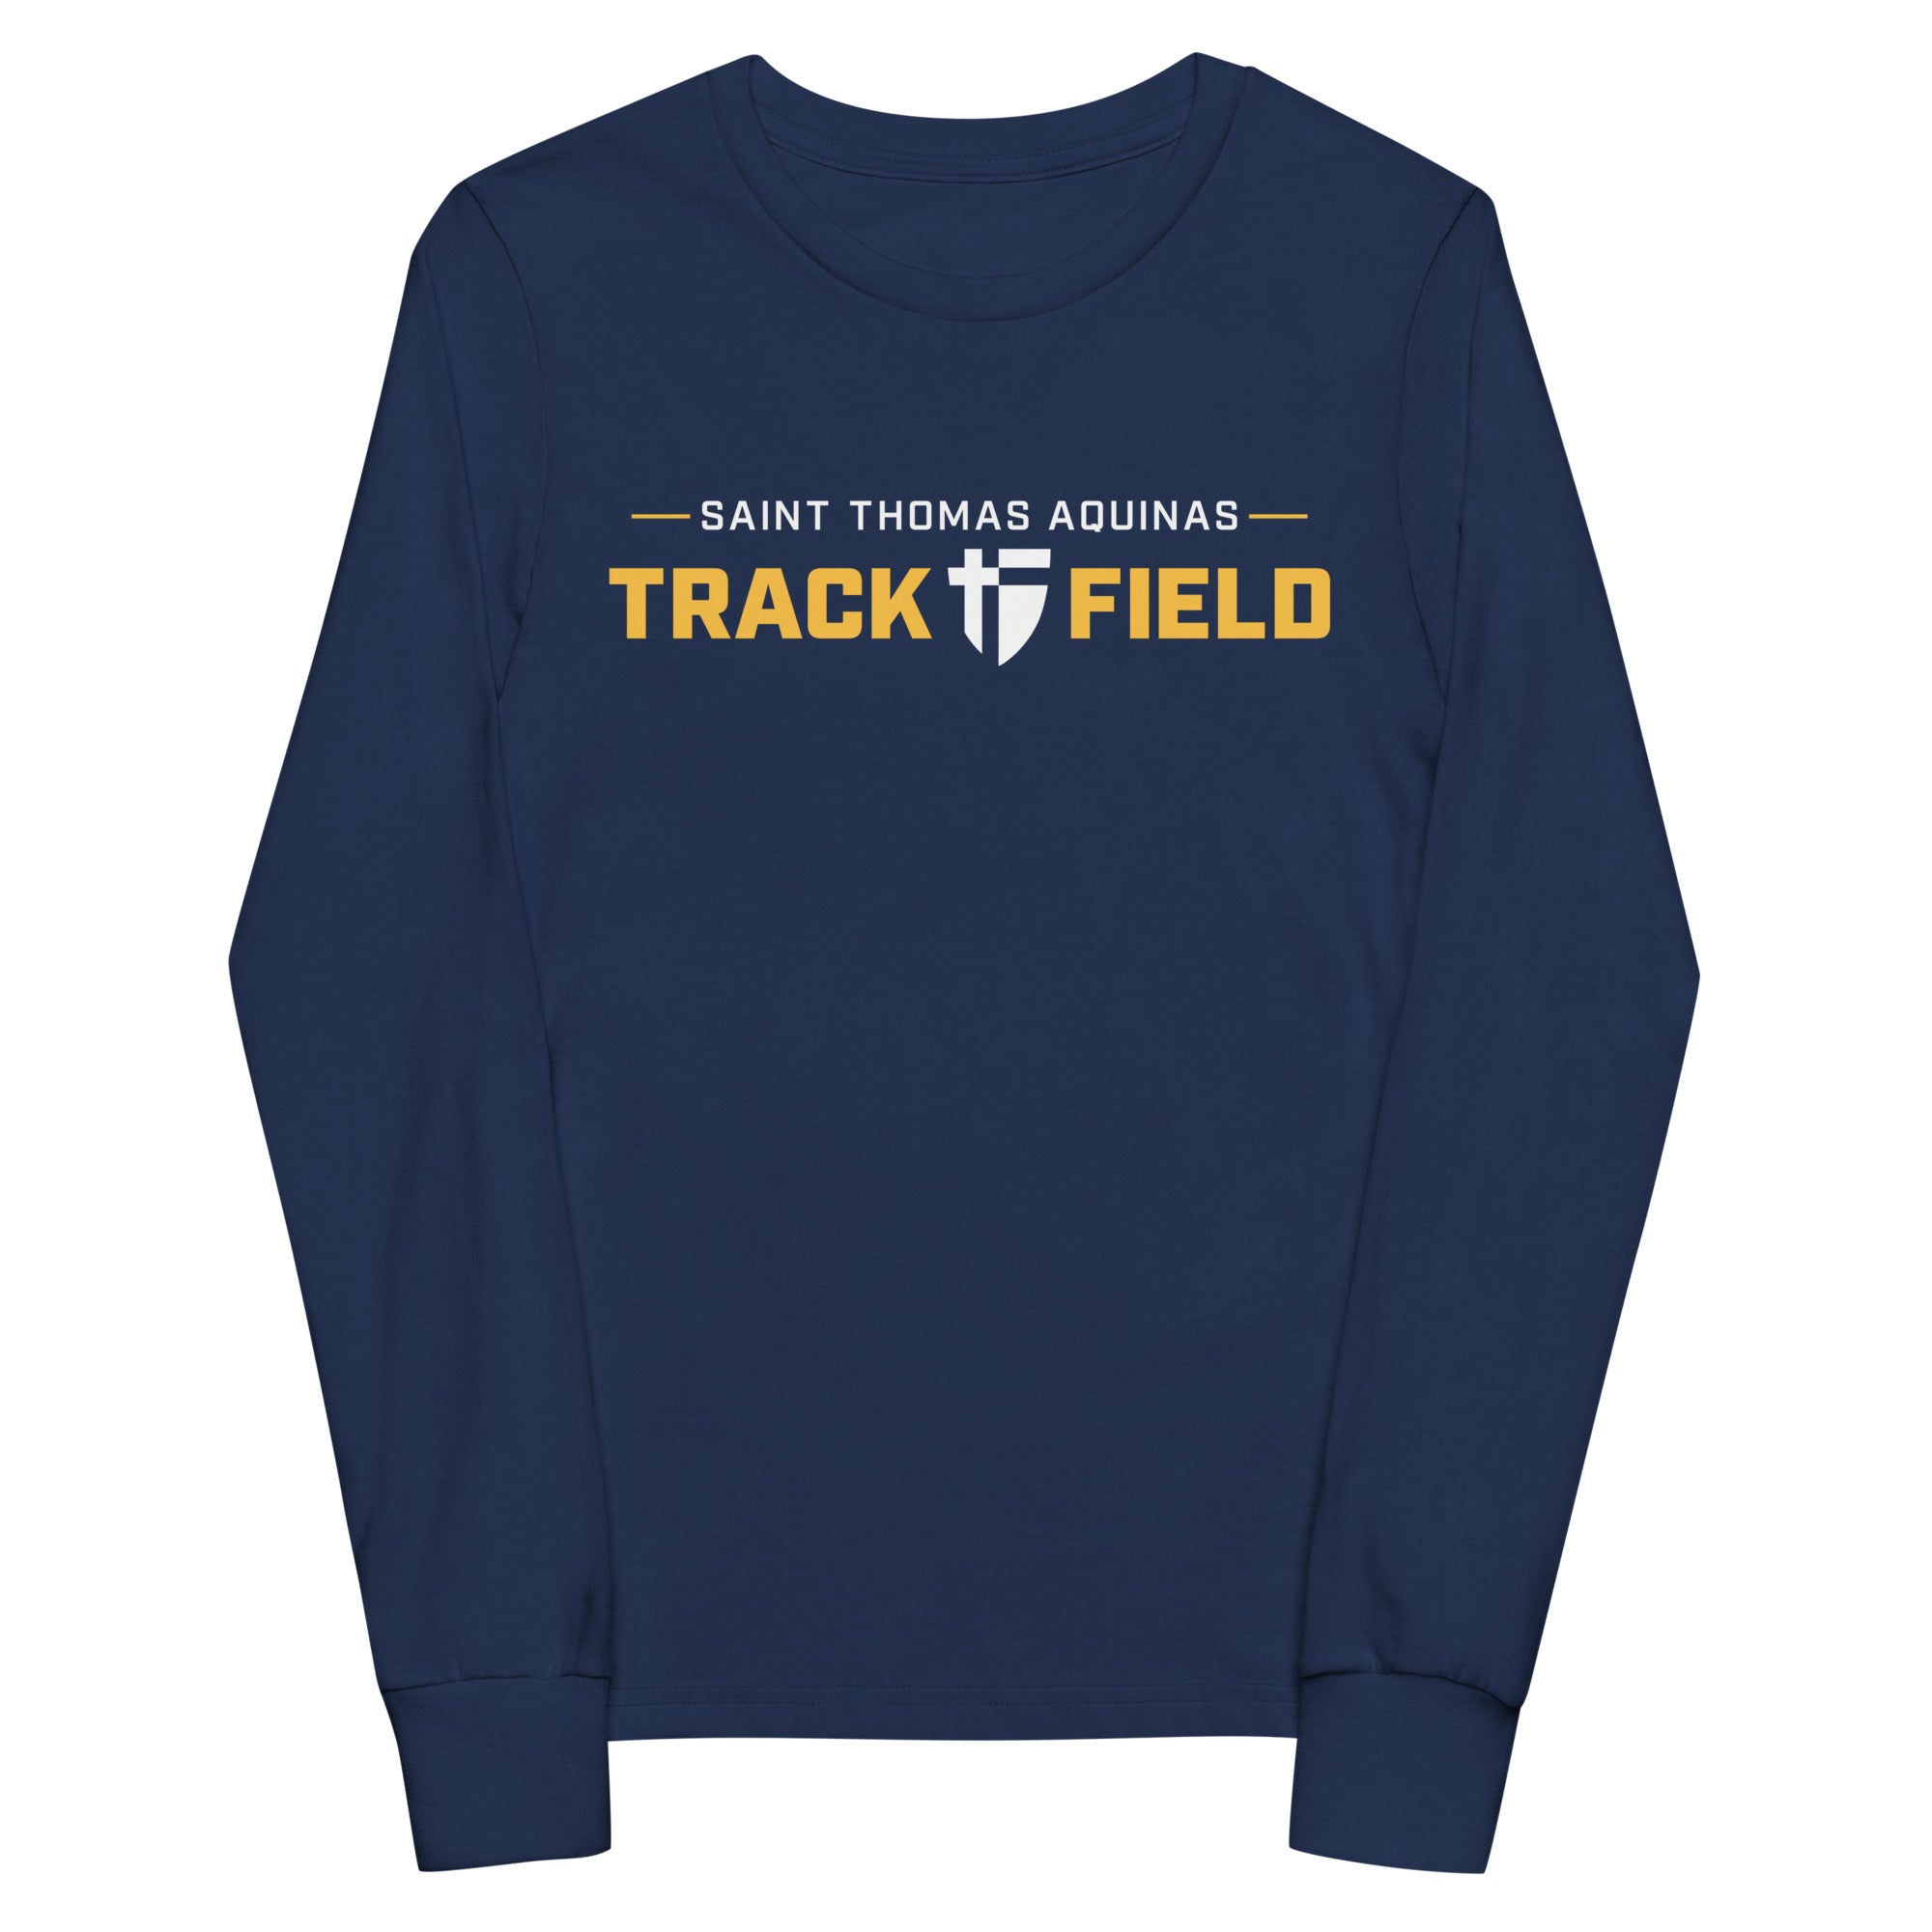 Saint Thomas Aquinas Track & Field Youth long sleeve tee